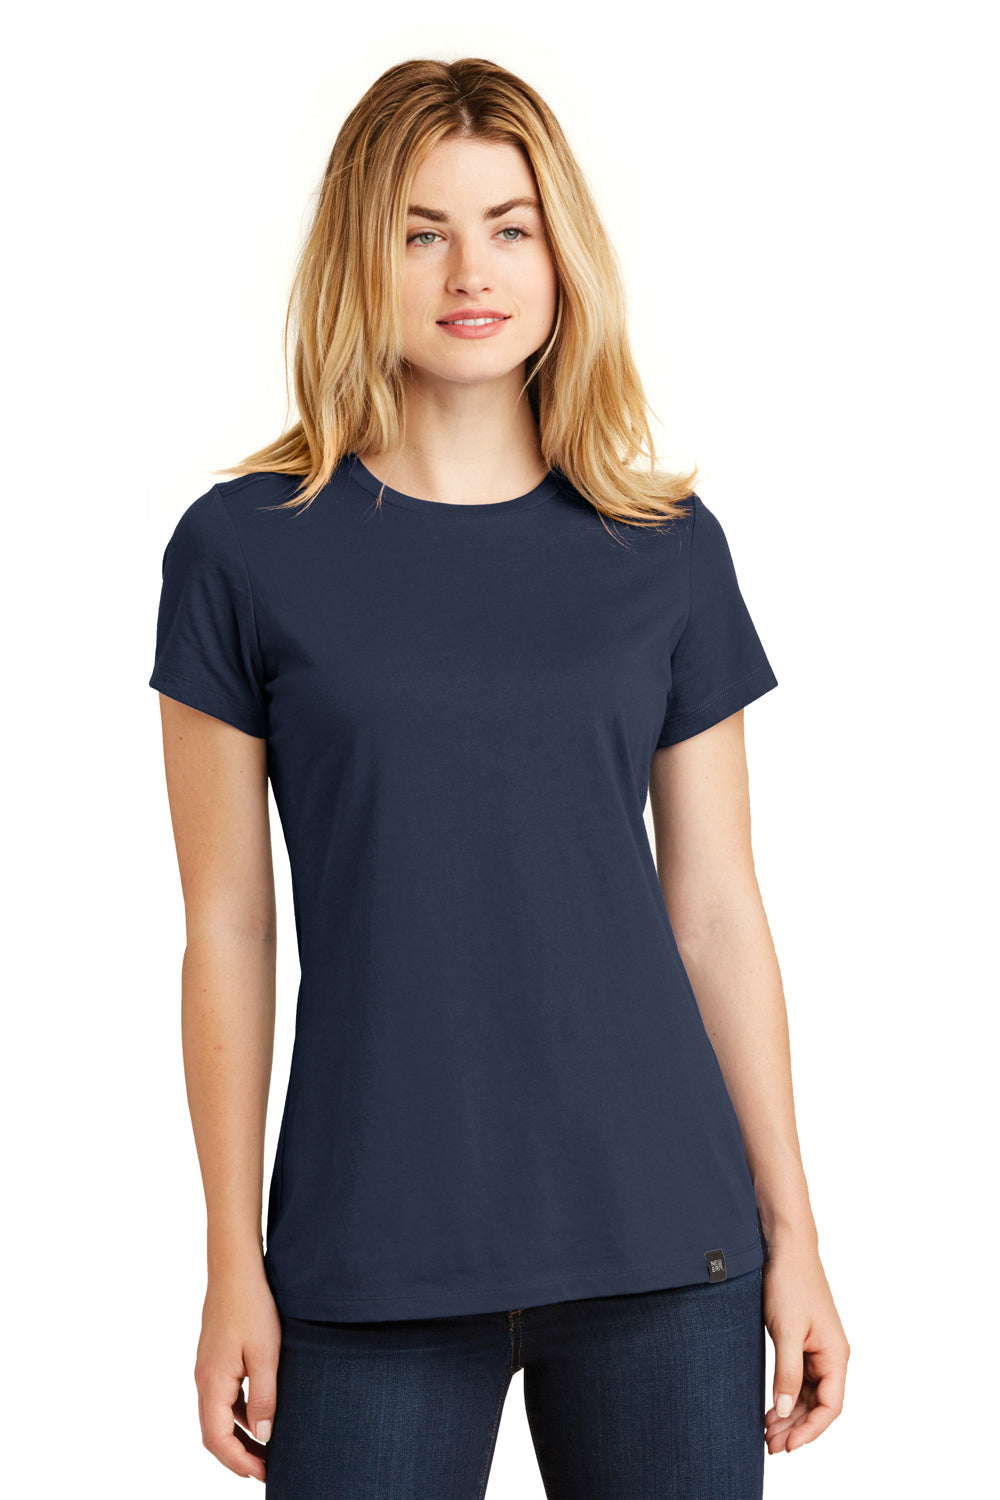 New Era LNEA100 Womens Heritage Short Sleeve Crewneck T-Shirt Navy Blue Front